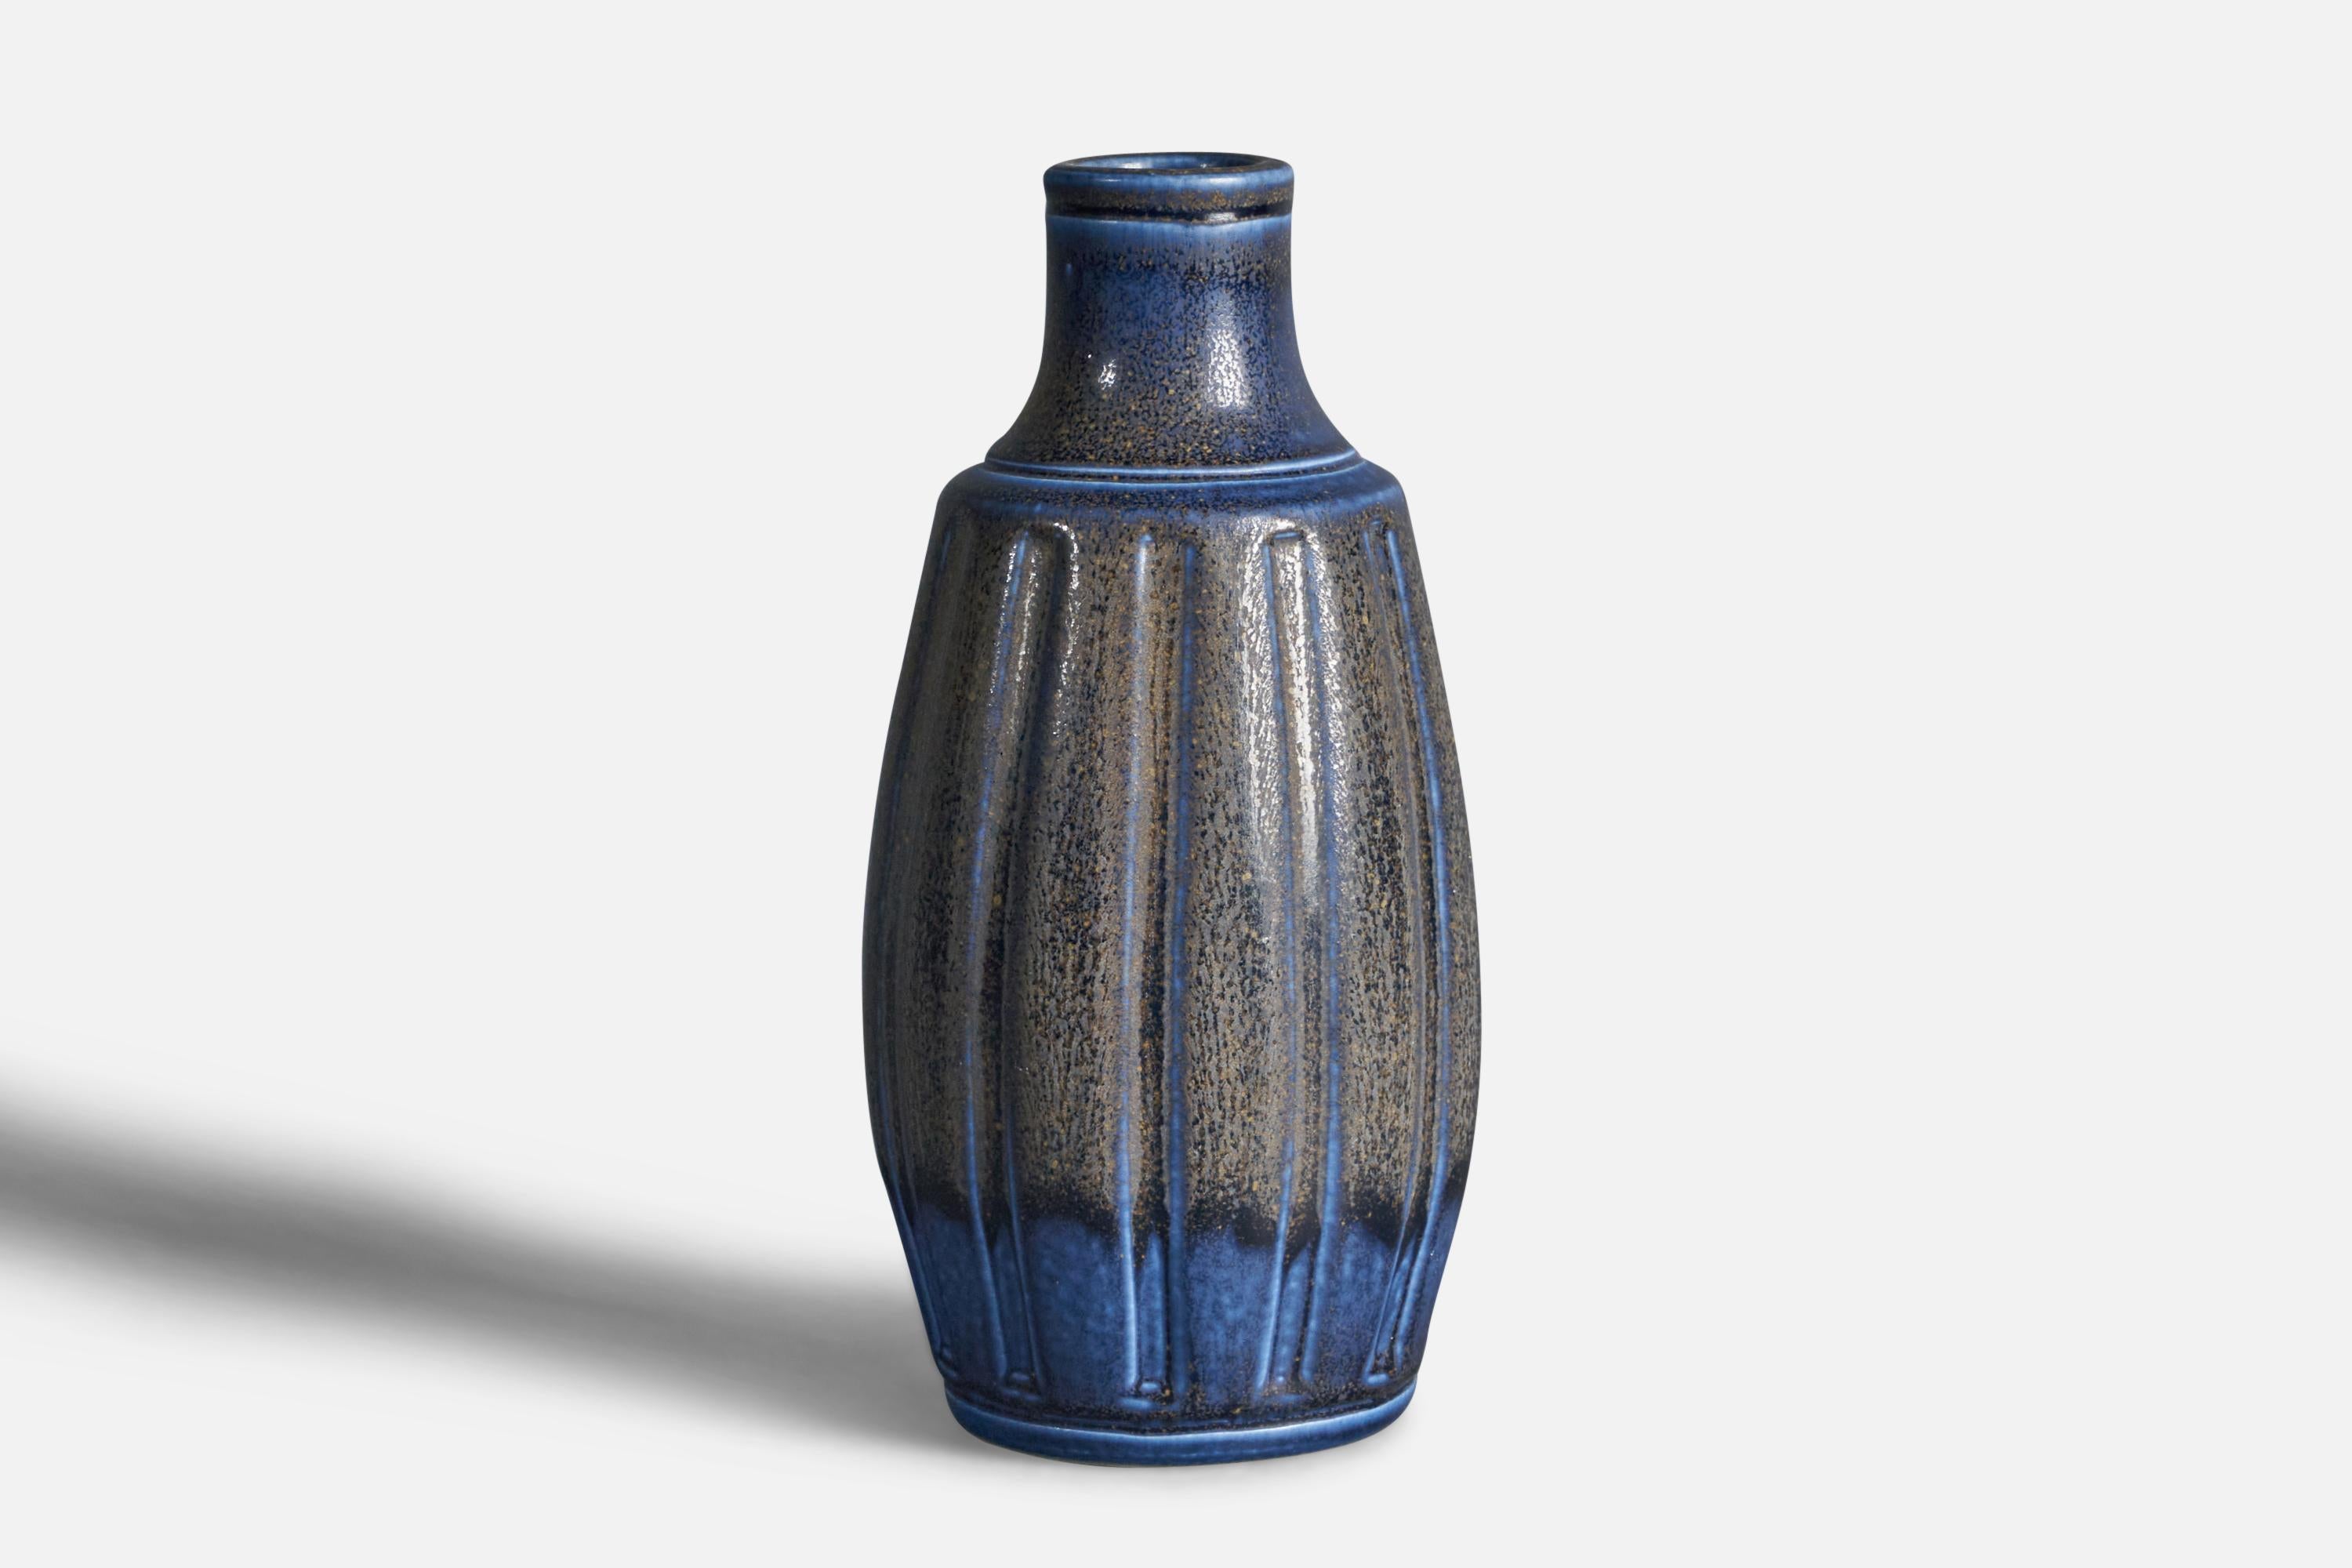 A blue-glazed stoneware vase designed by Wilhelm Kåge and produced by Gustavsberg, Sweden, 1960s.